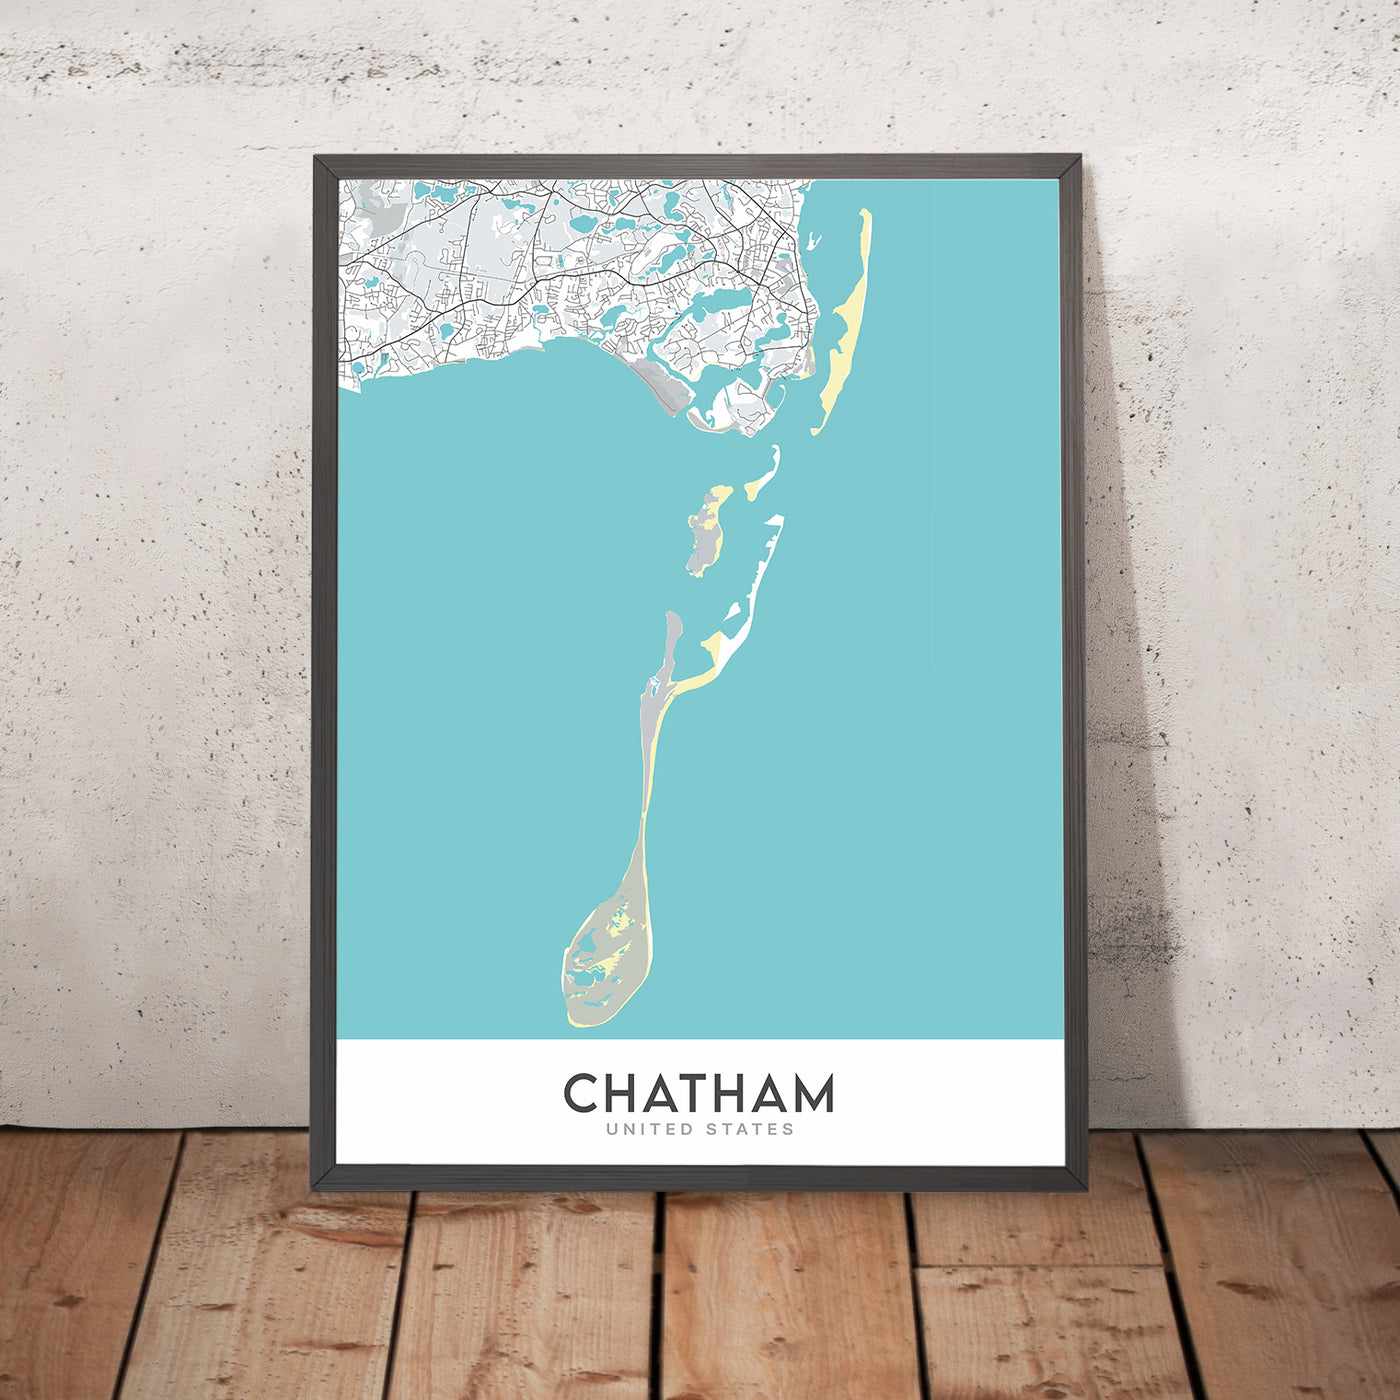 Moderner Stadtplan von Chatham, MA: Chatham Lighthouse, Chatham Fish Pier, Chatham Railroad Museum, Route 28, Pleasant Bay